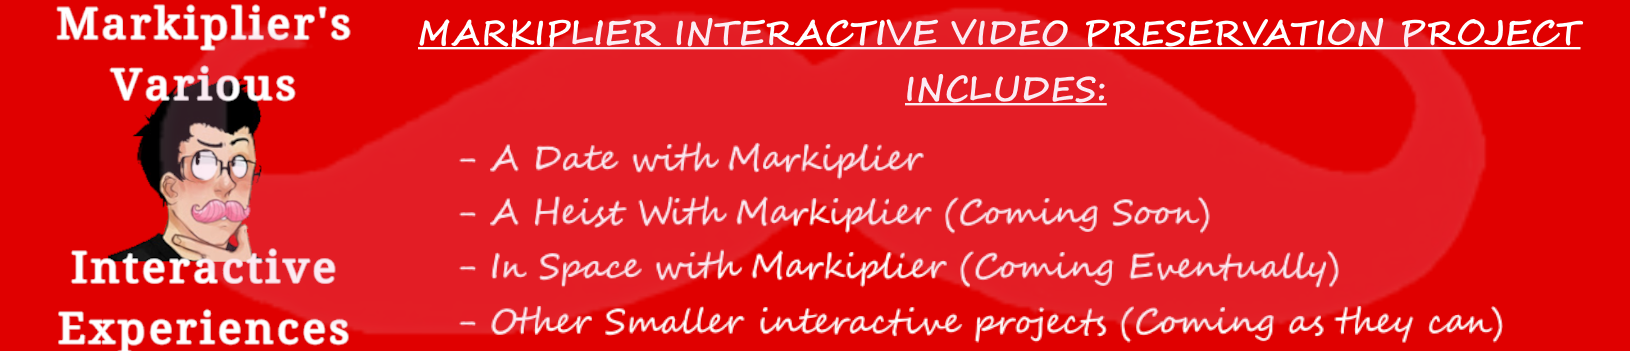 Markiplier Interactive Video Preservation Project